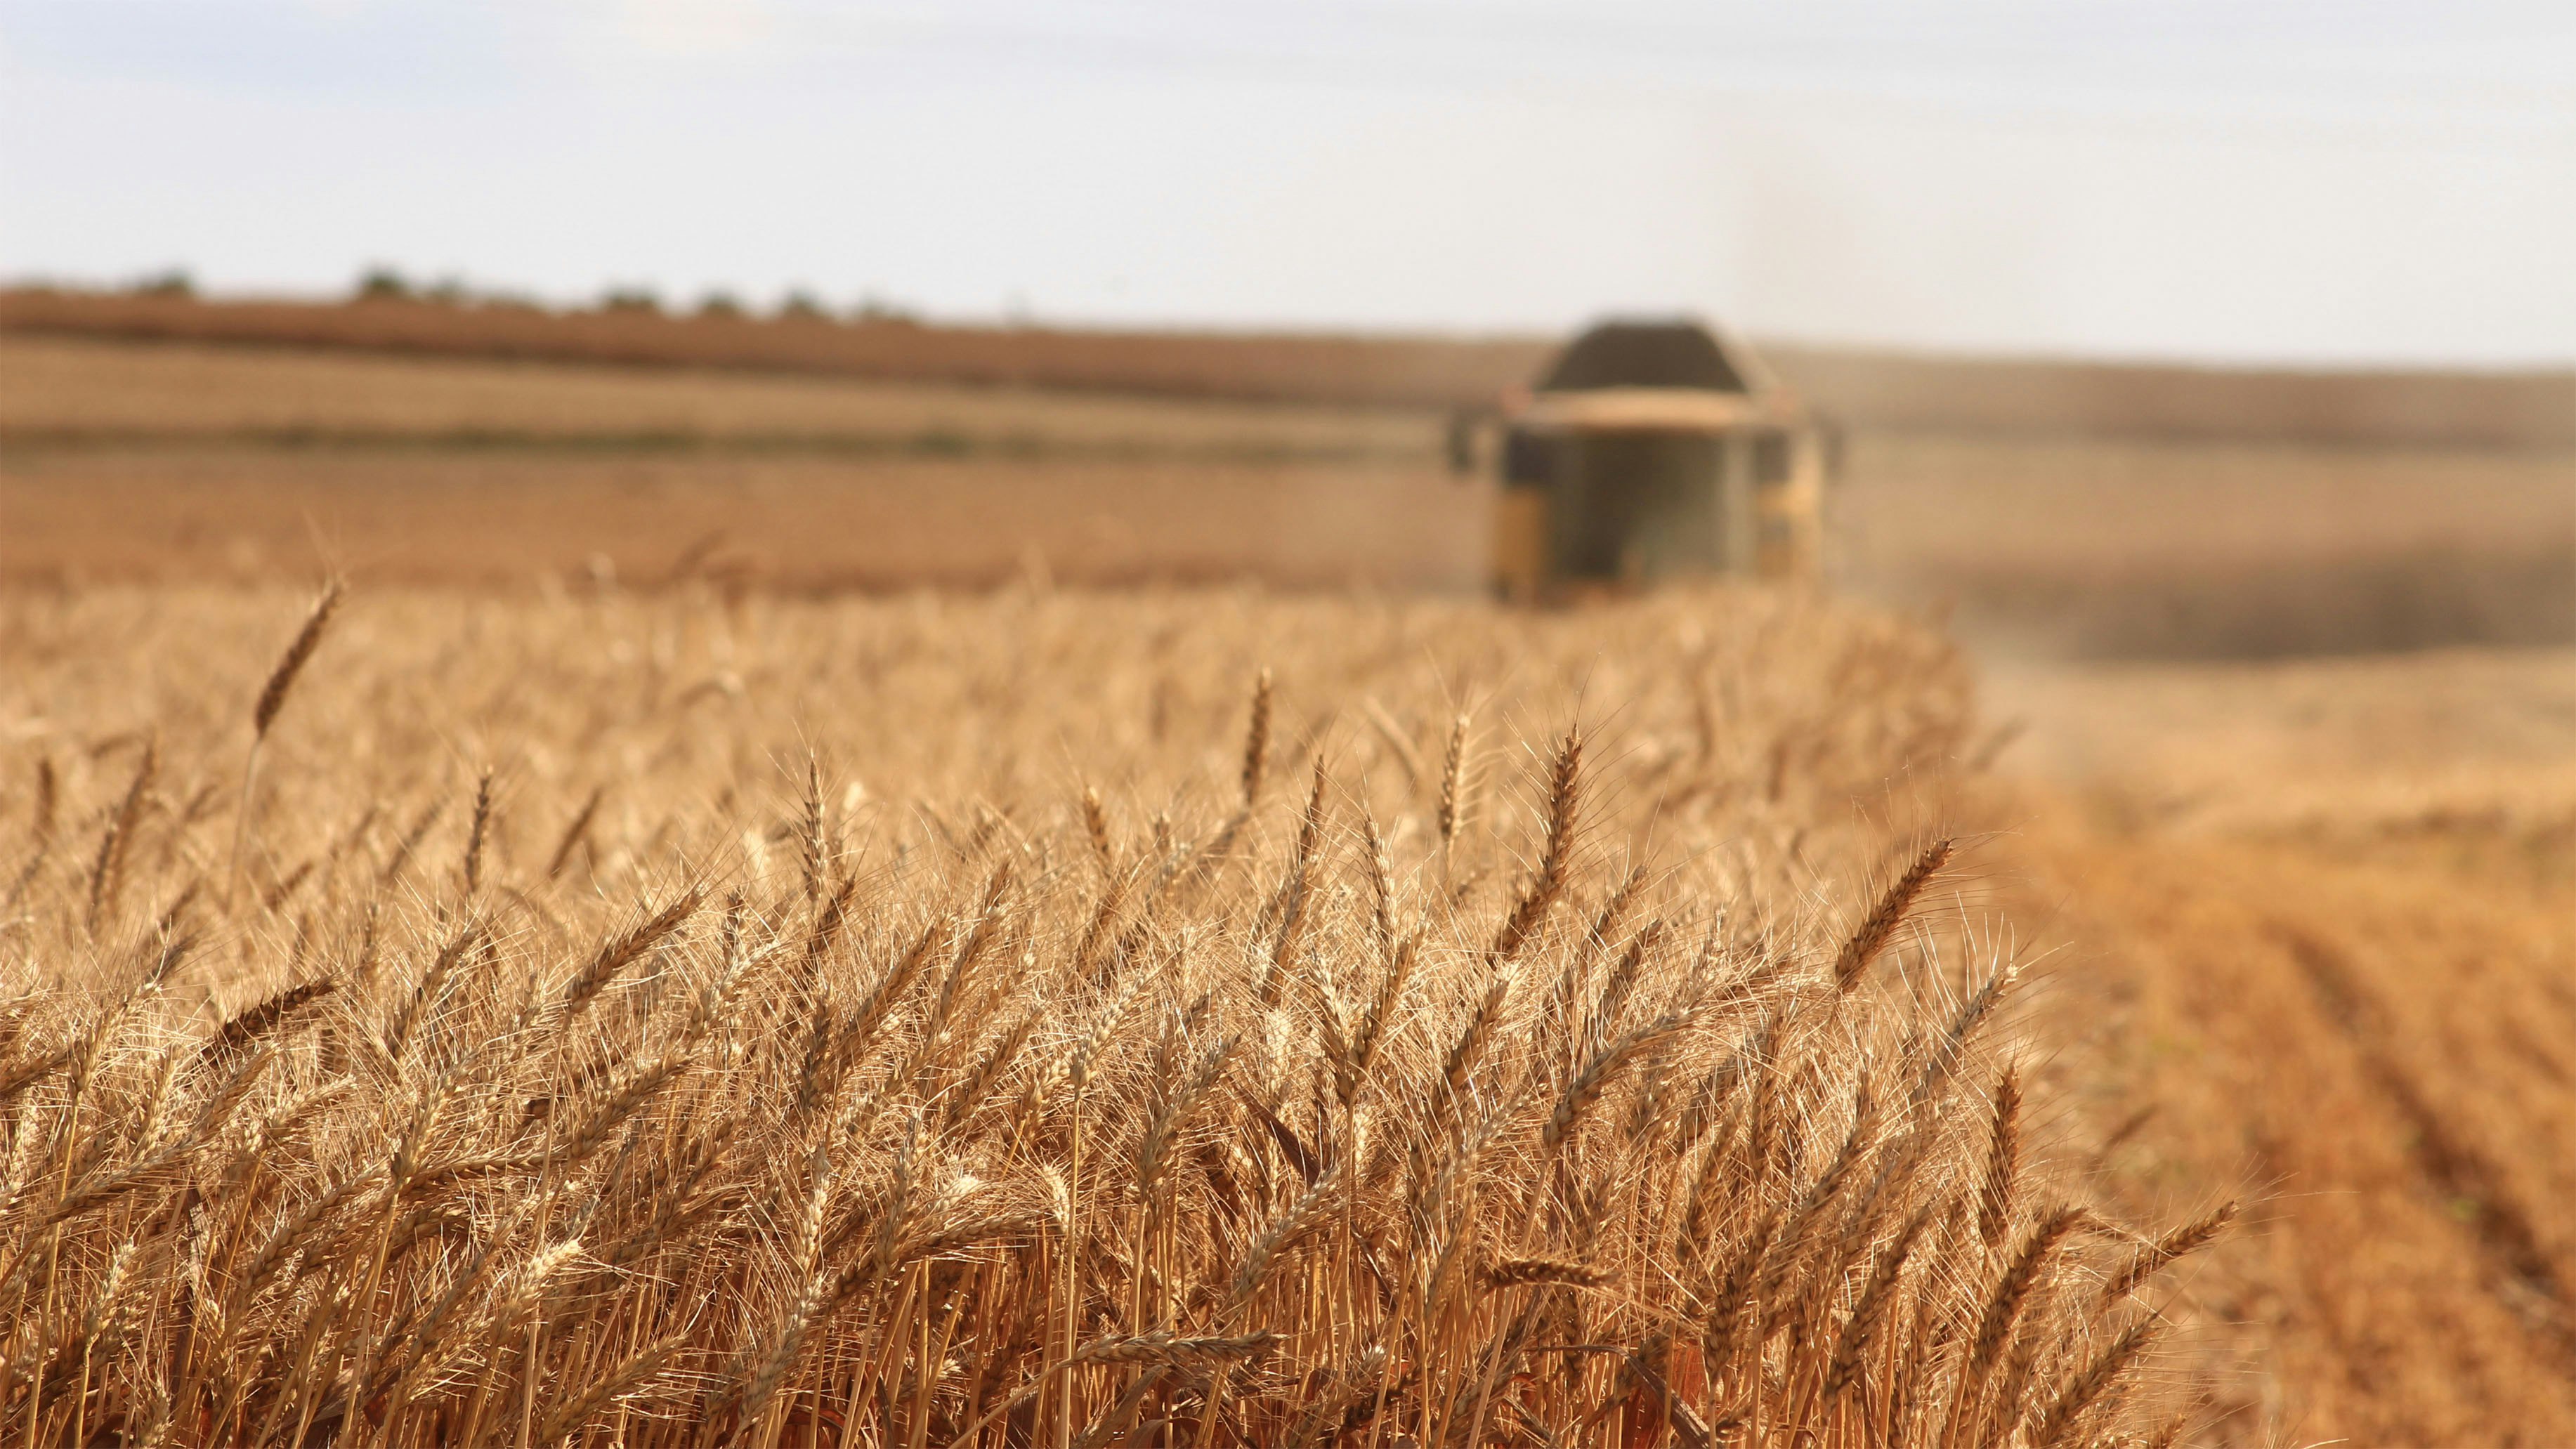 Harvesting the Wheat Crop